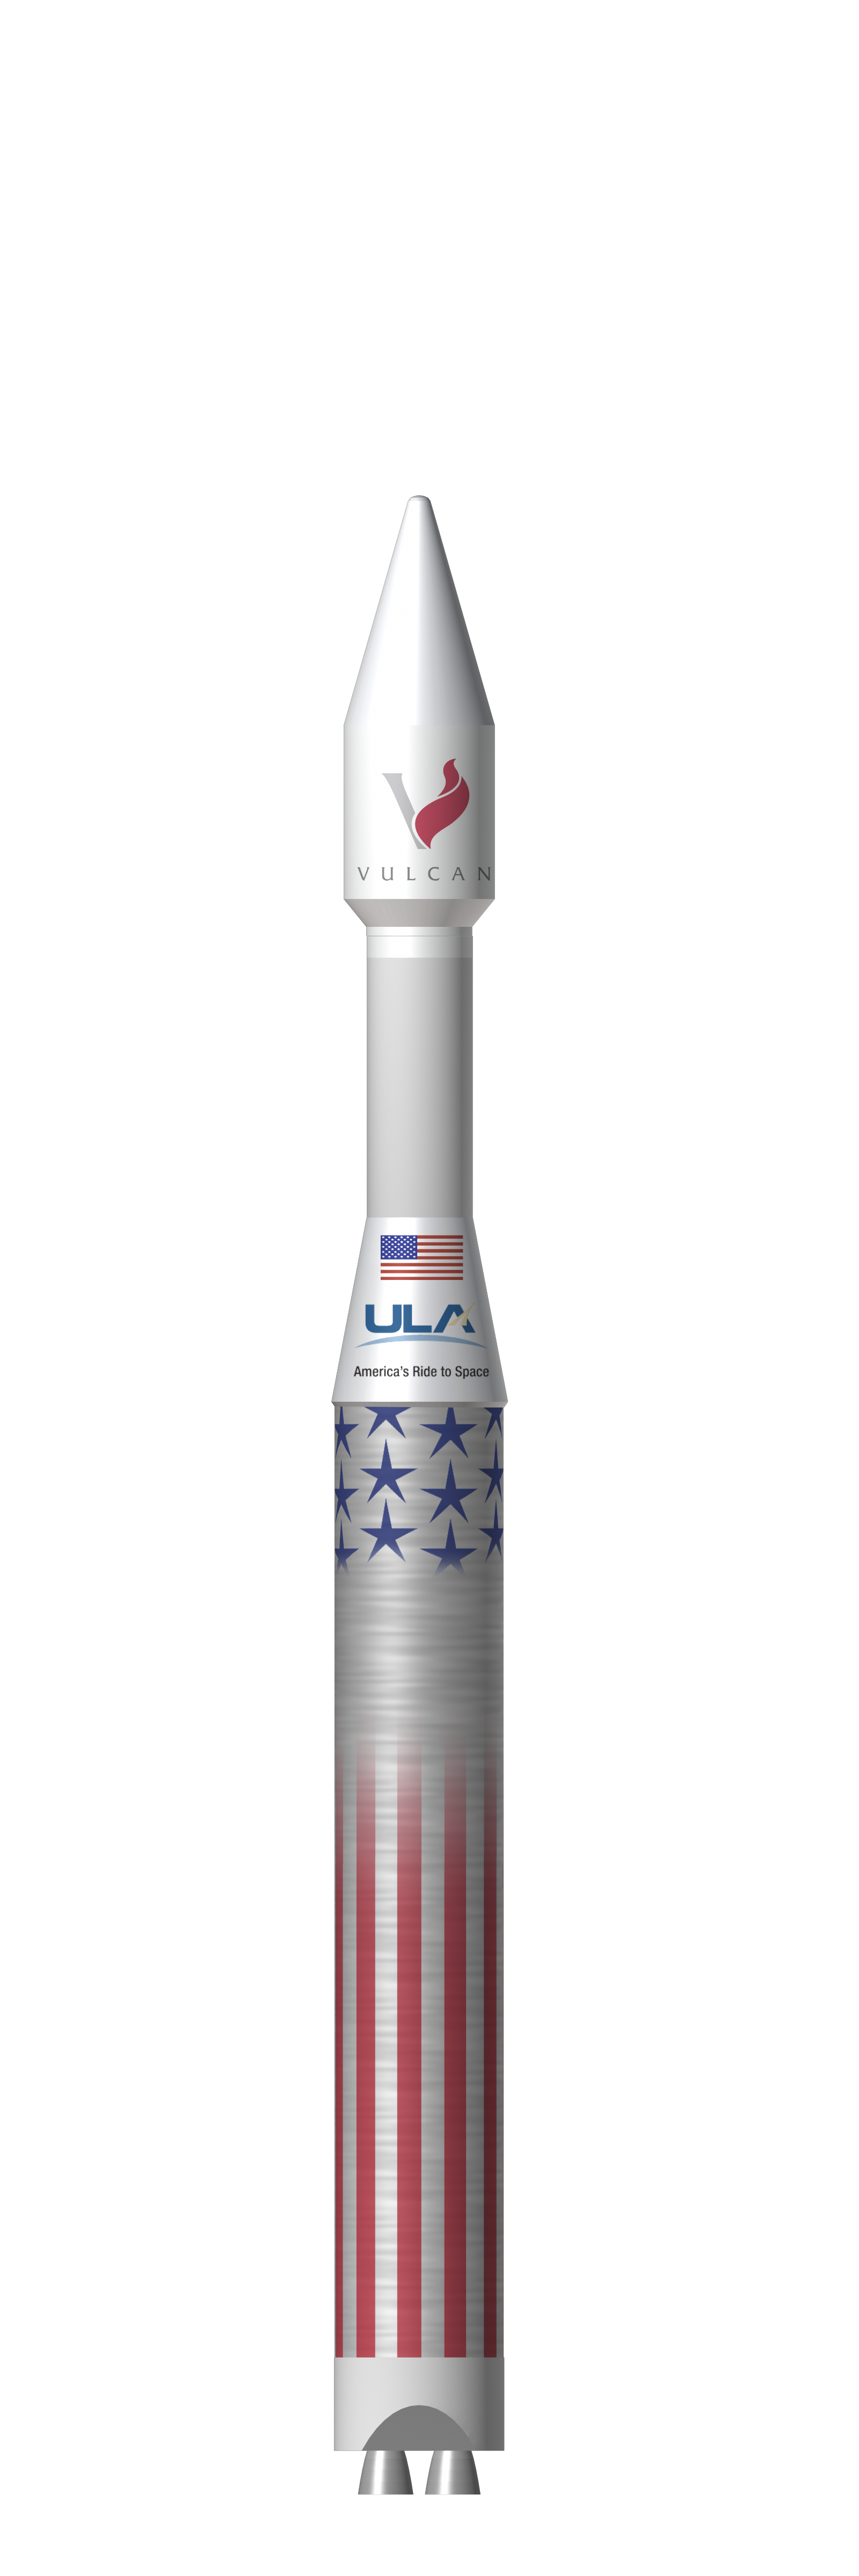 Artwork: ULA Vulcan rocket revealed – Spaceflight Now